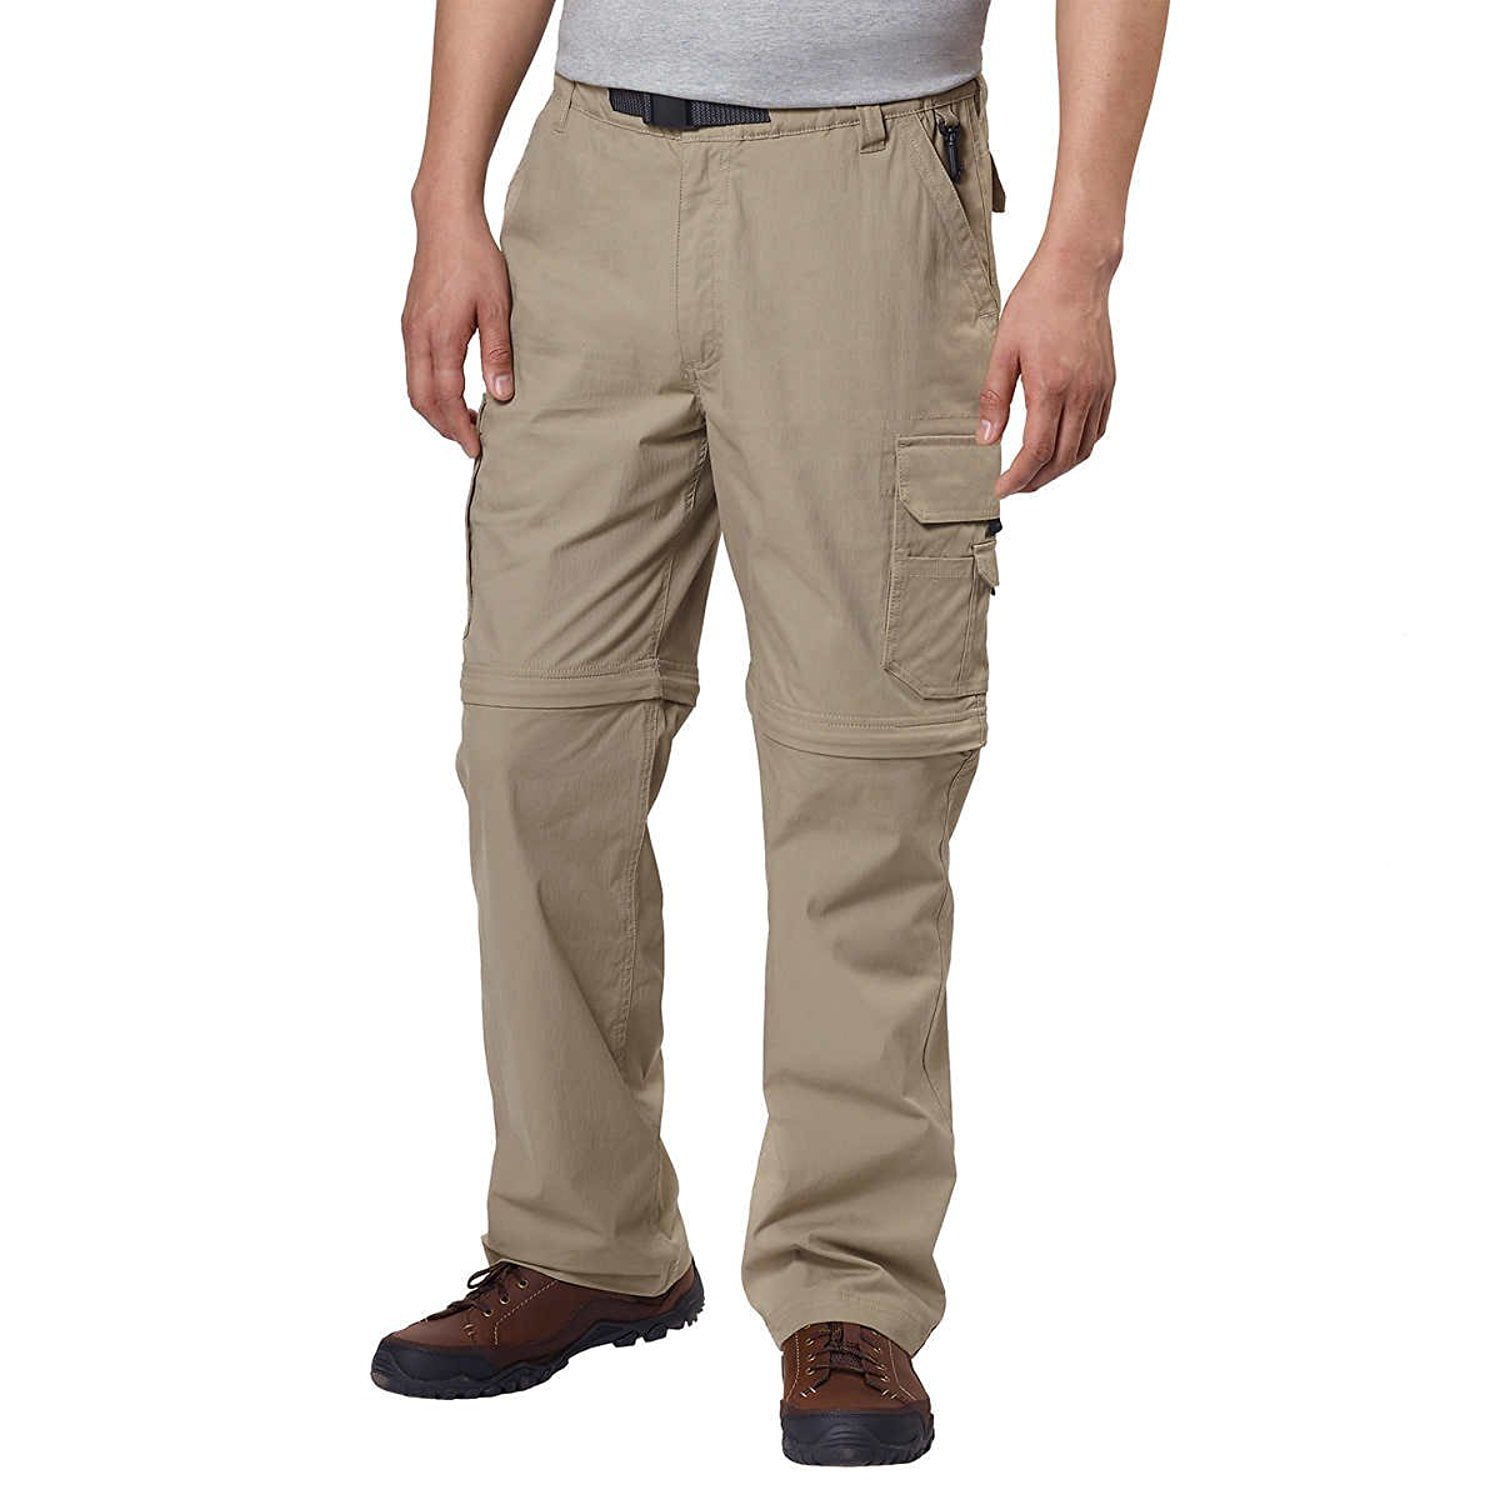 BC Clothing Men's Convertible Stretch Cargo Hiking Pants Shorts Zippered Pockets